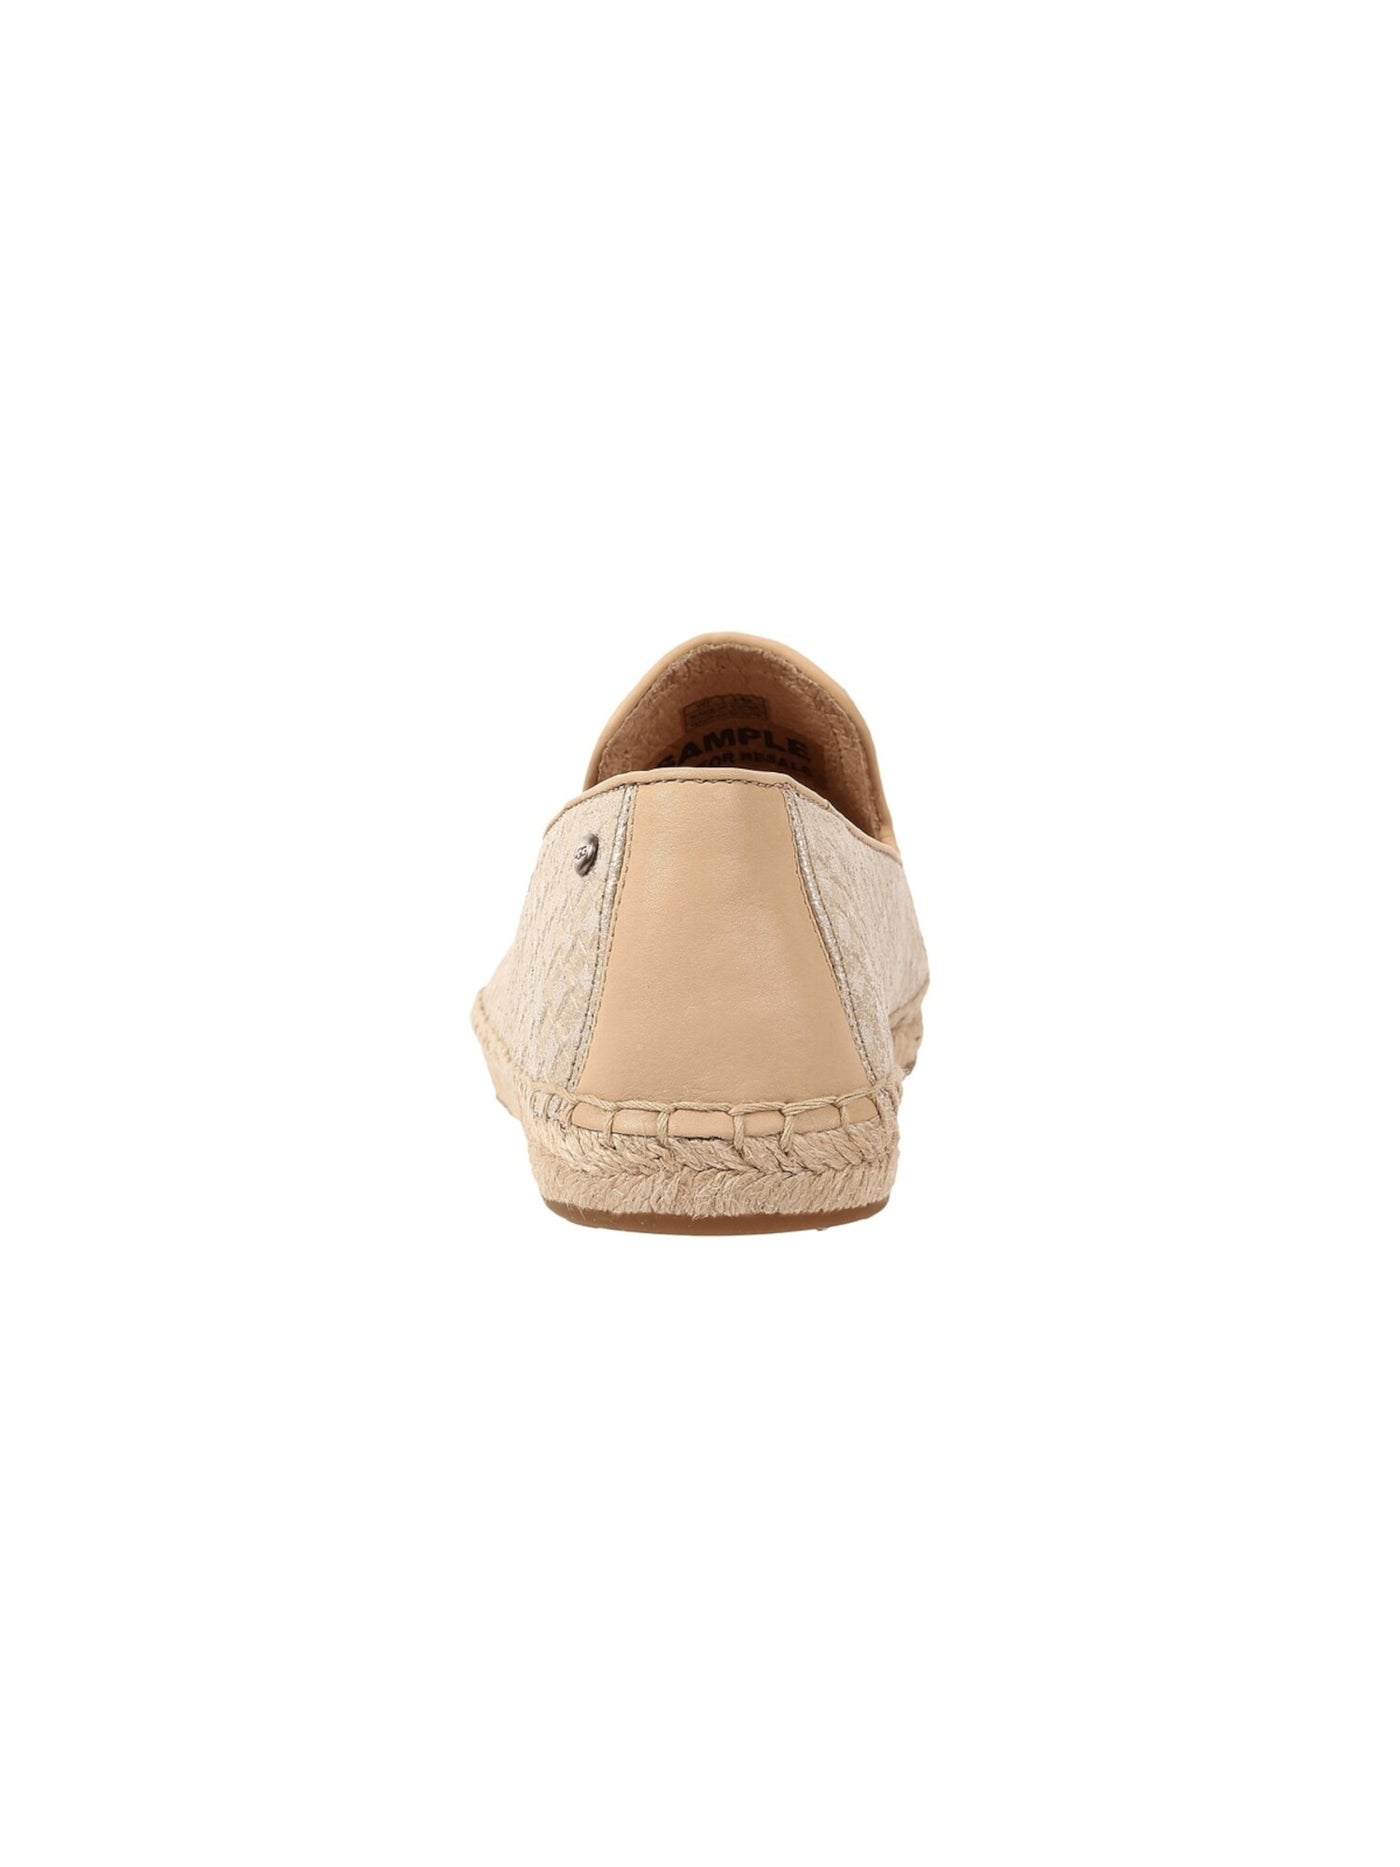 UGG Womens Gold Woven Metallic Sandrinne Cap Toe Slip On Leather Espadrille Shoes 7